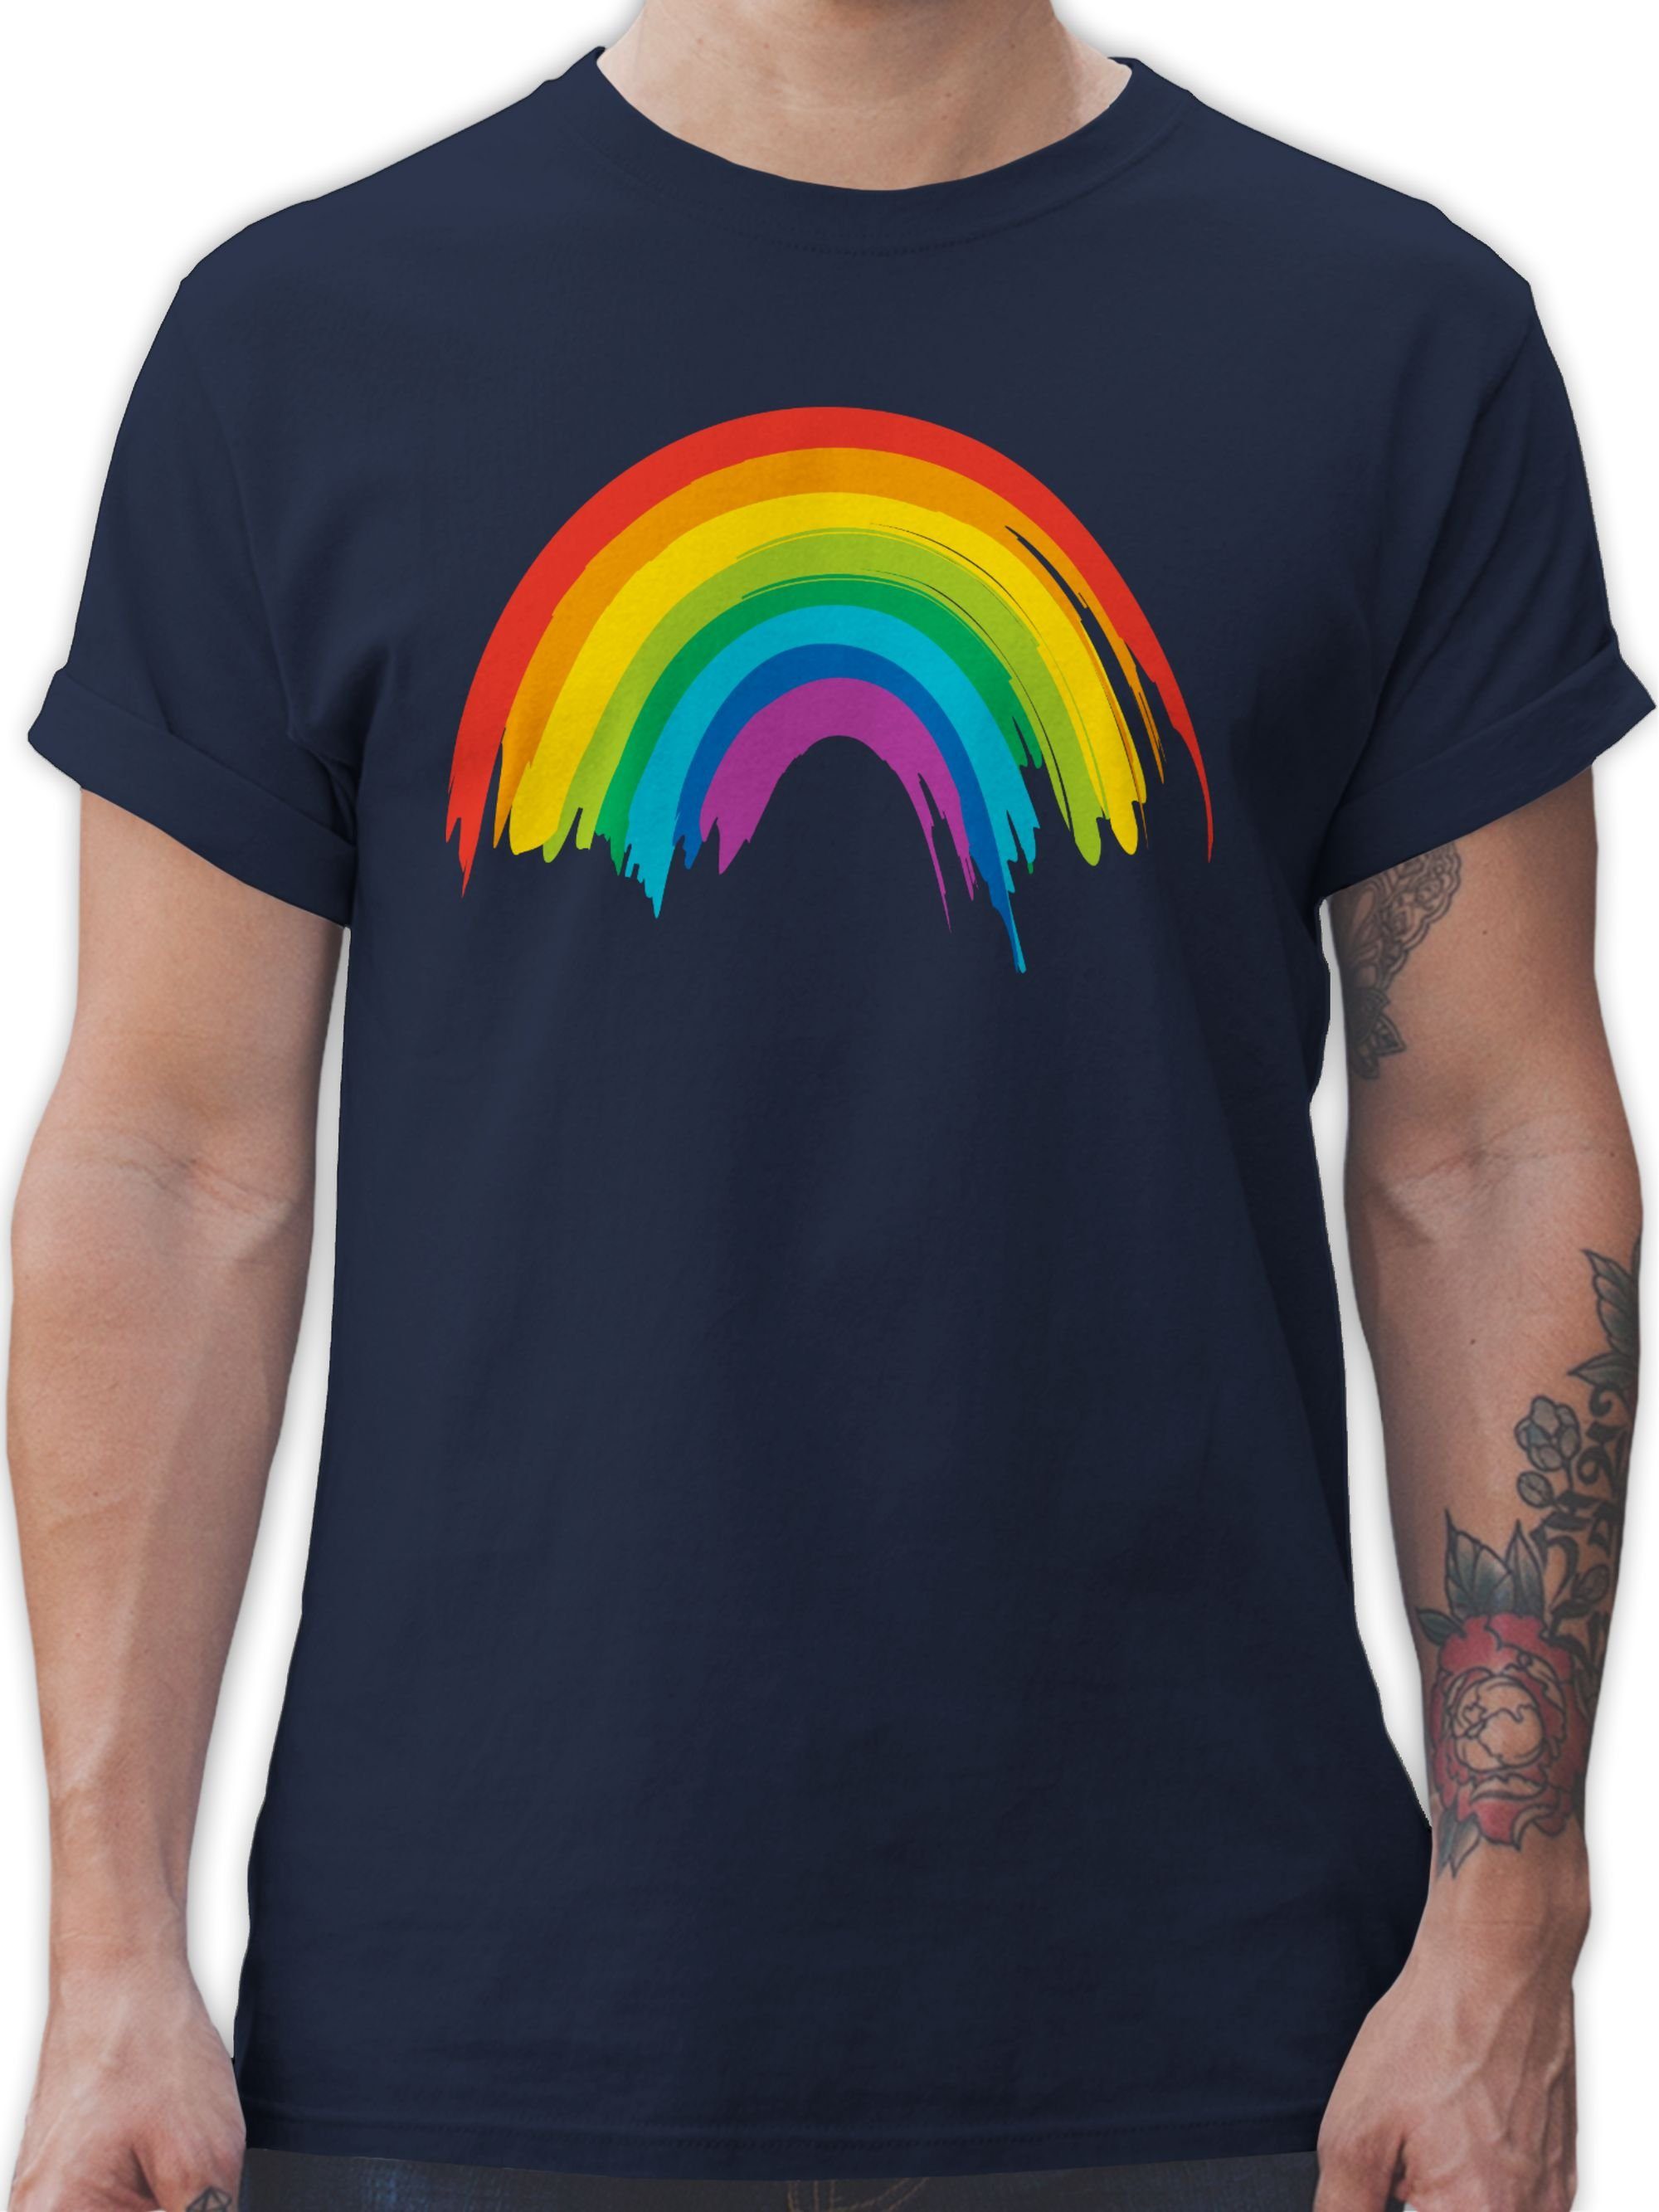 Shirtracer T-Shirt Regenbogen LGBT & LGBTQ LGBT Kleidung 2 Navy Blau